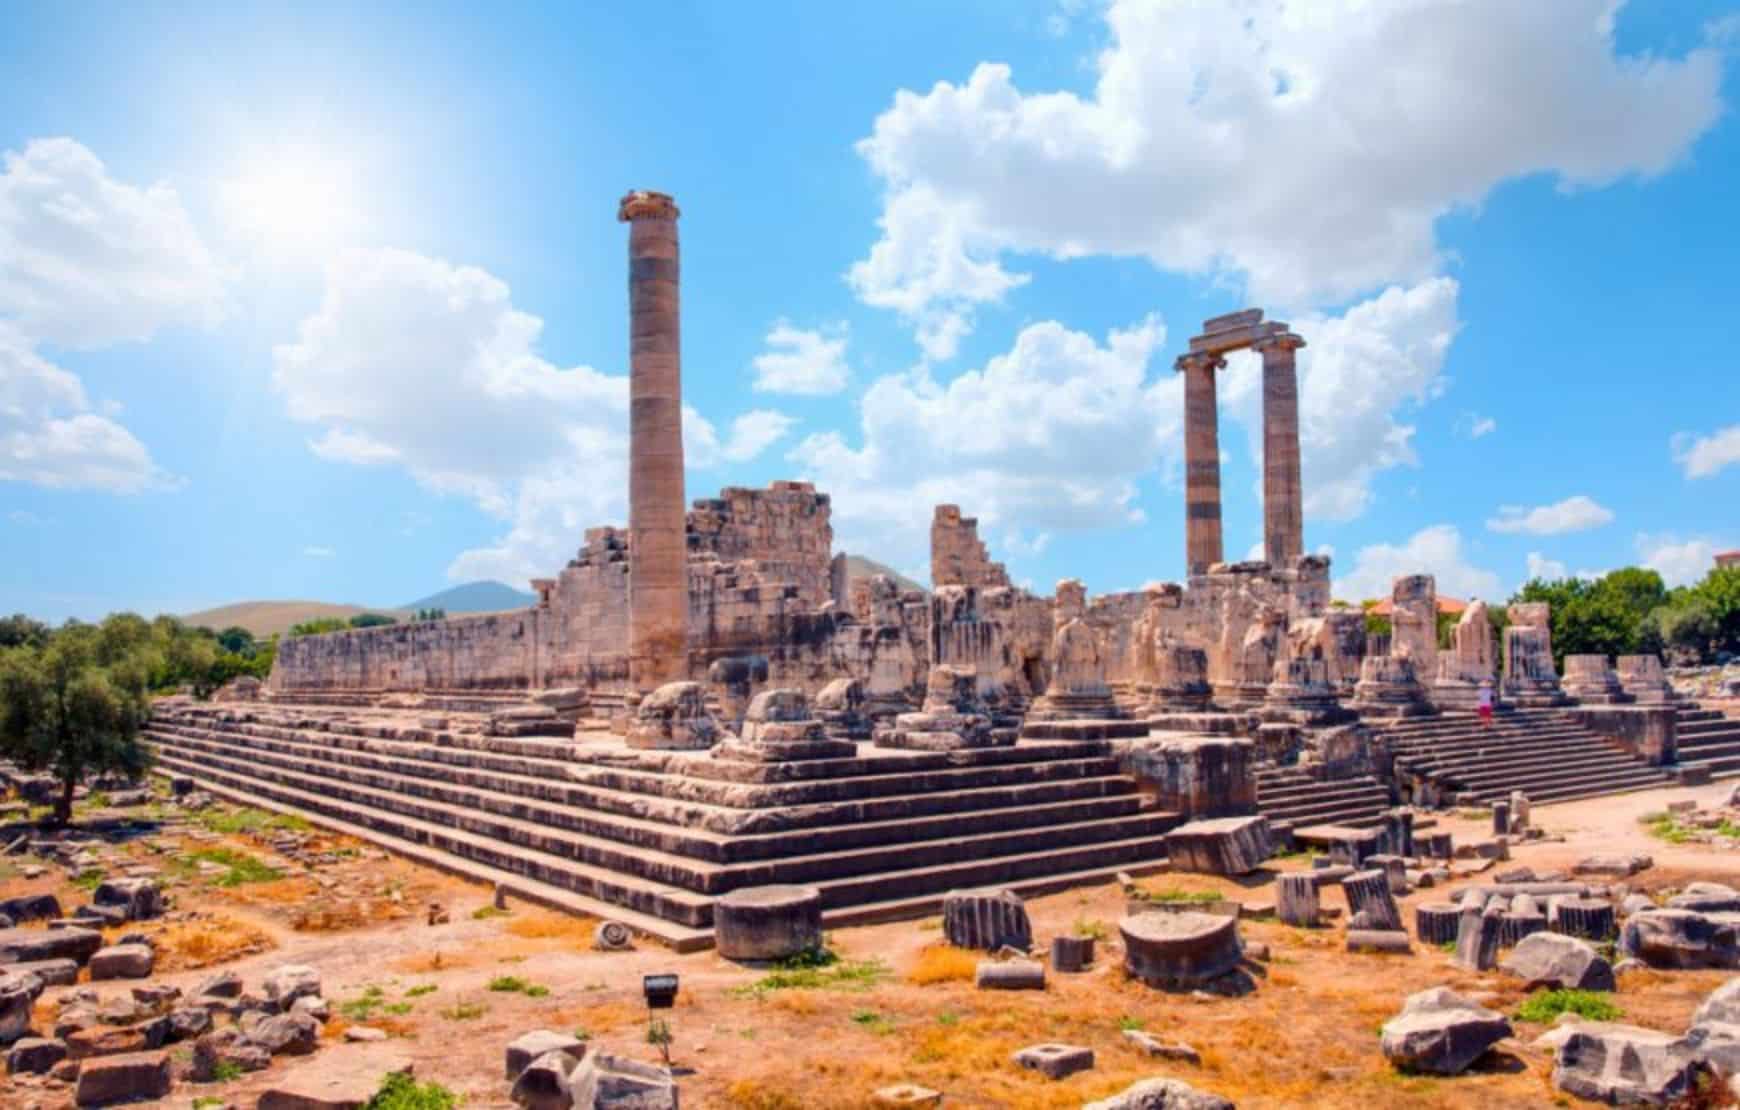 Priene, Miletus and Didyma Private Tour from Kusadasi - Temple of Apollon